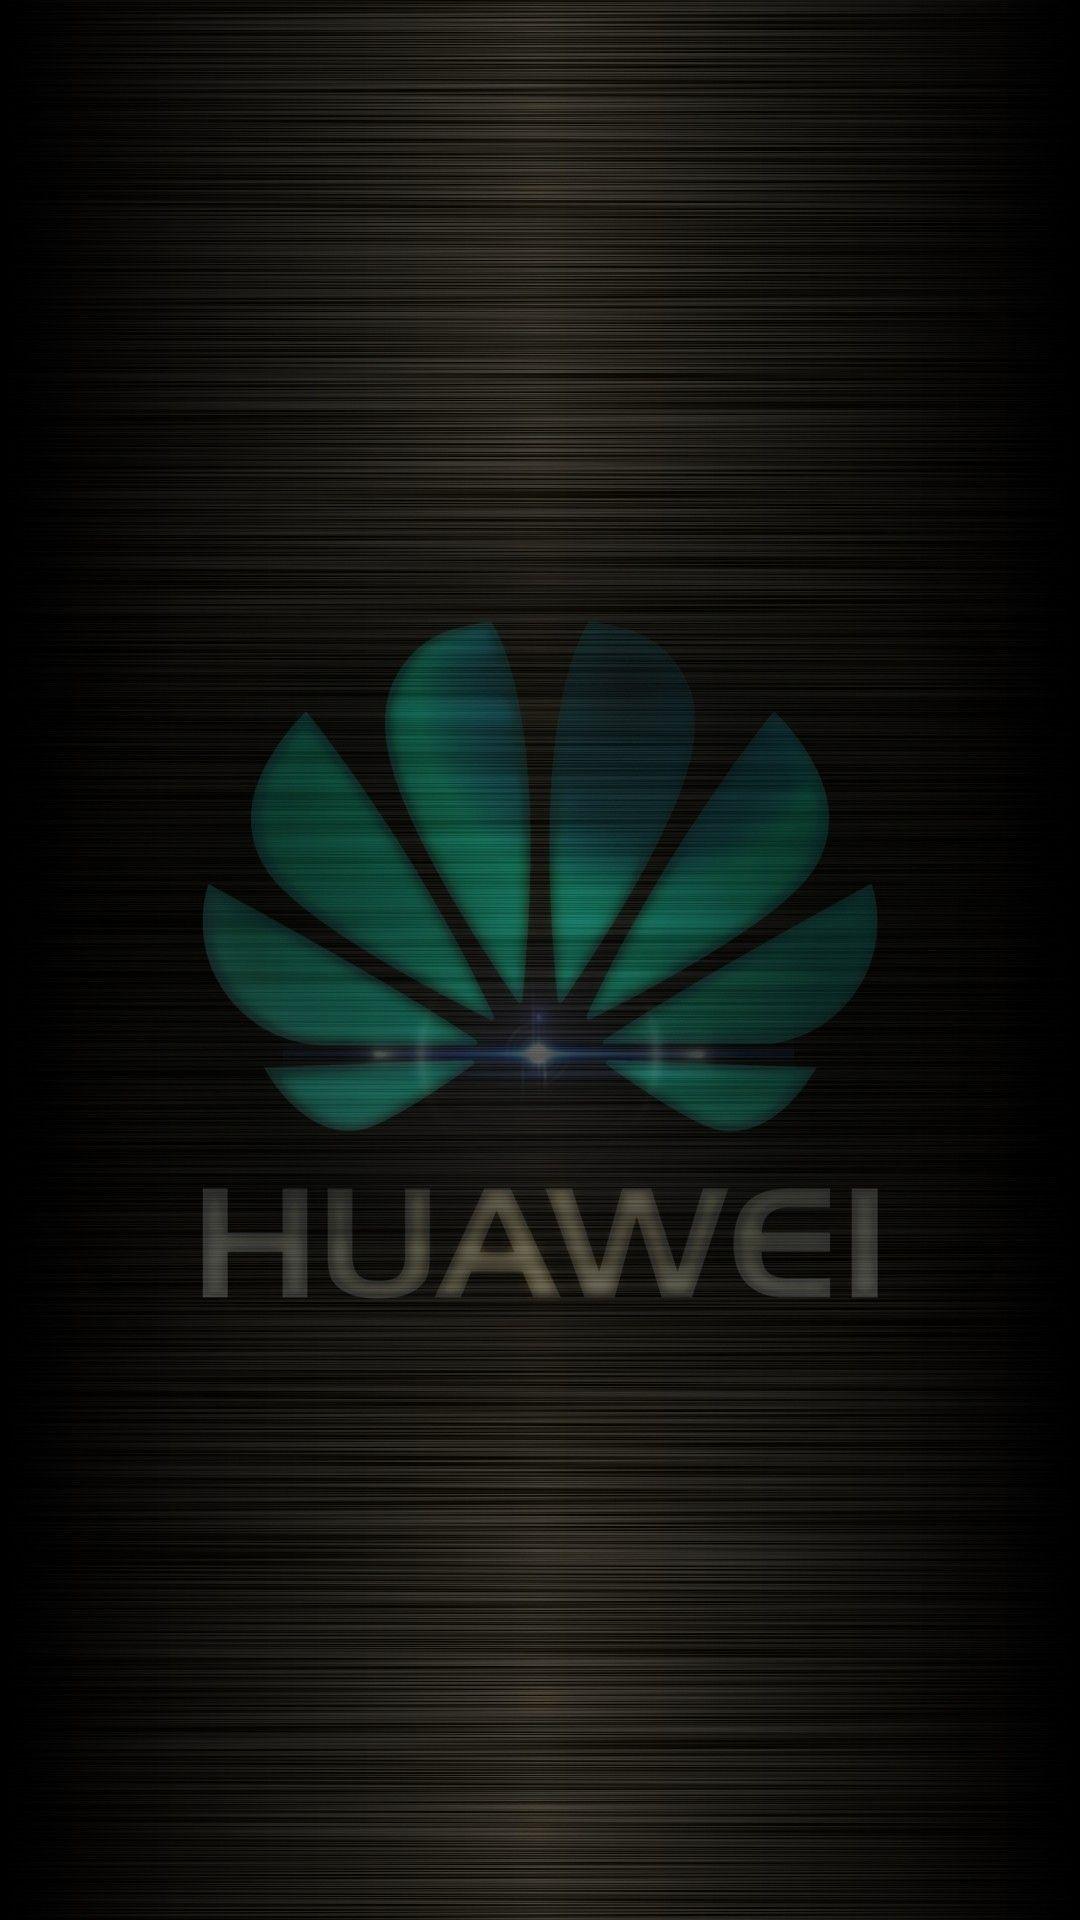 Huawei Mobile Wallpaper Free Huawei Mobile Background